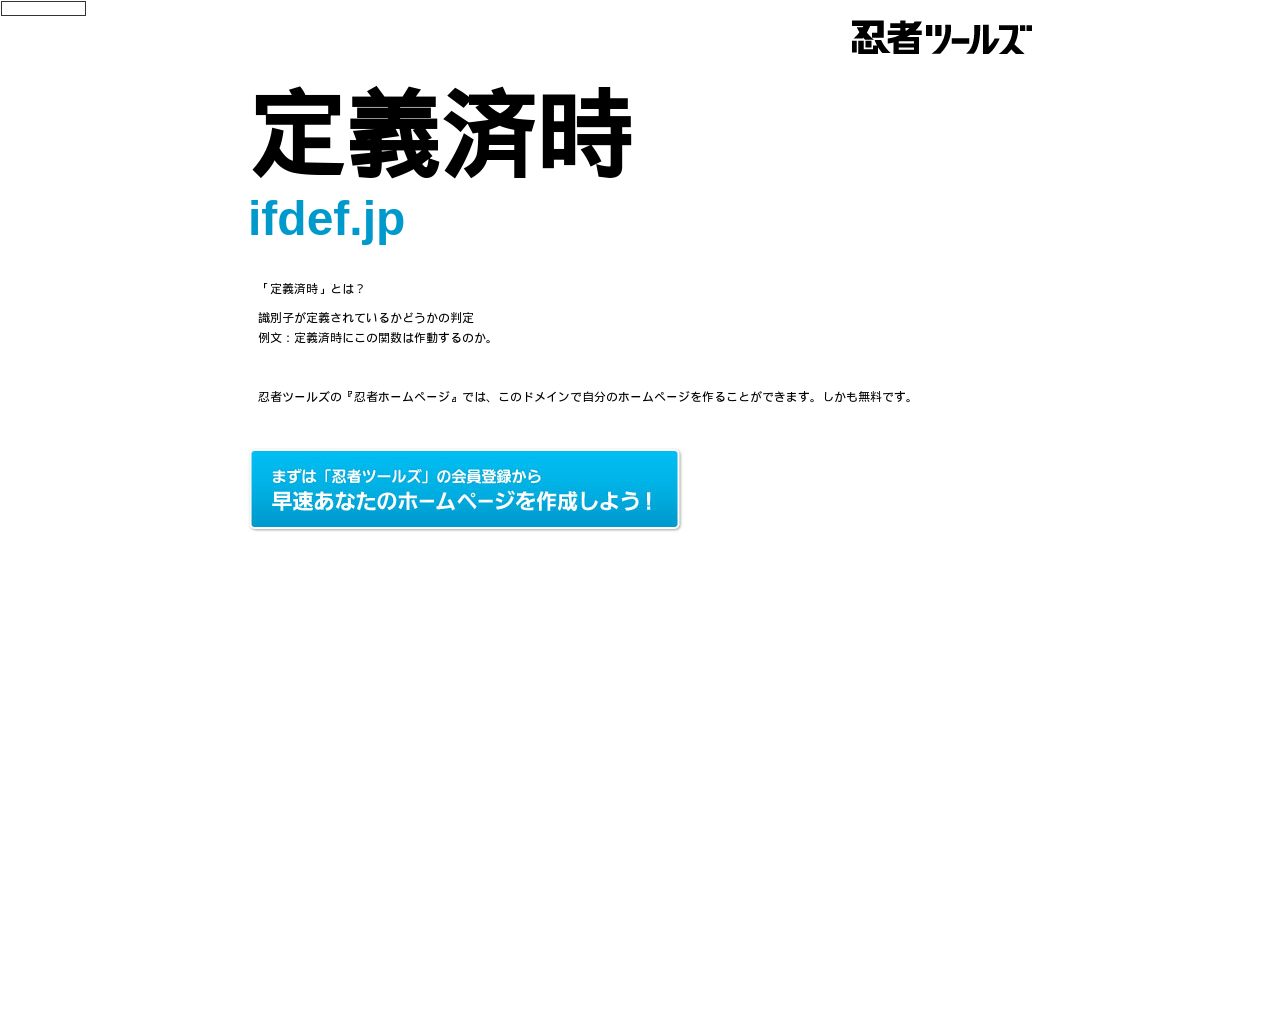 ifdef.jp